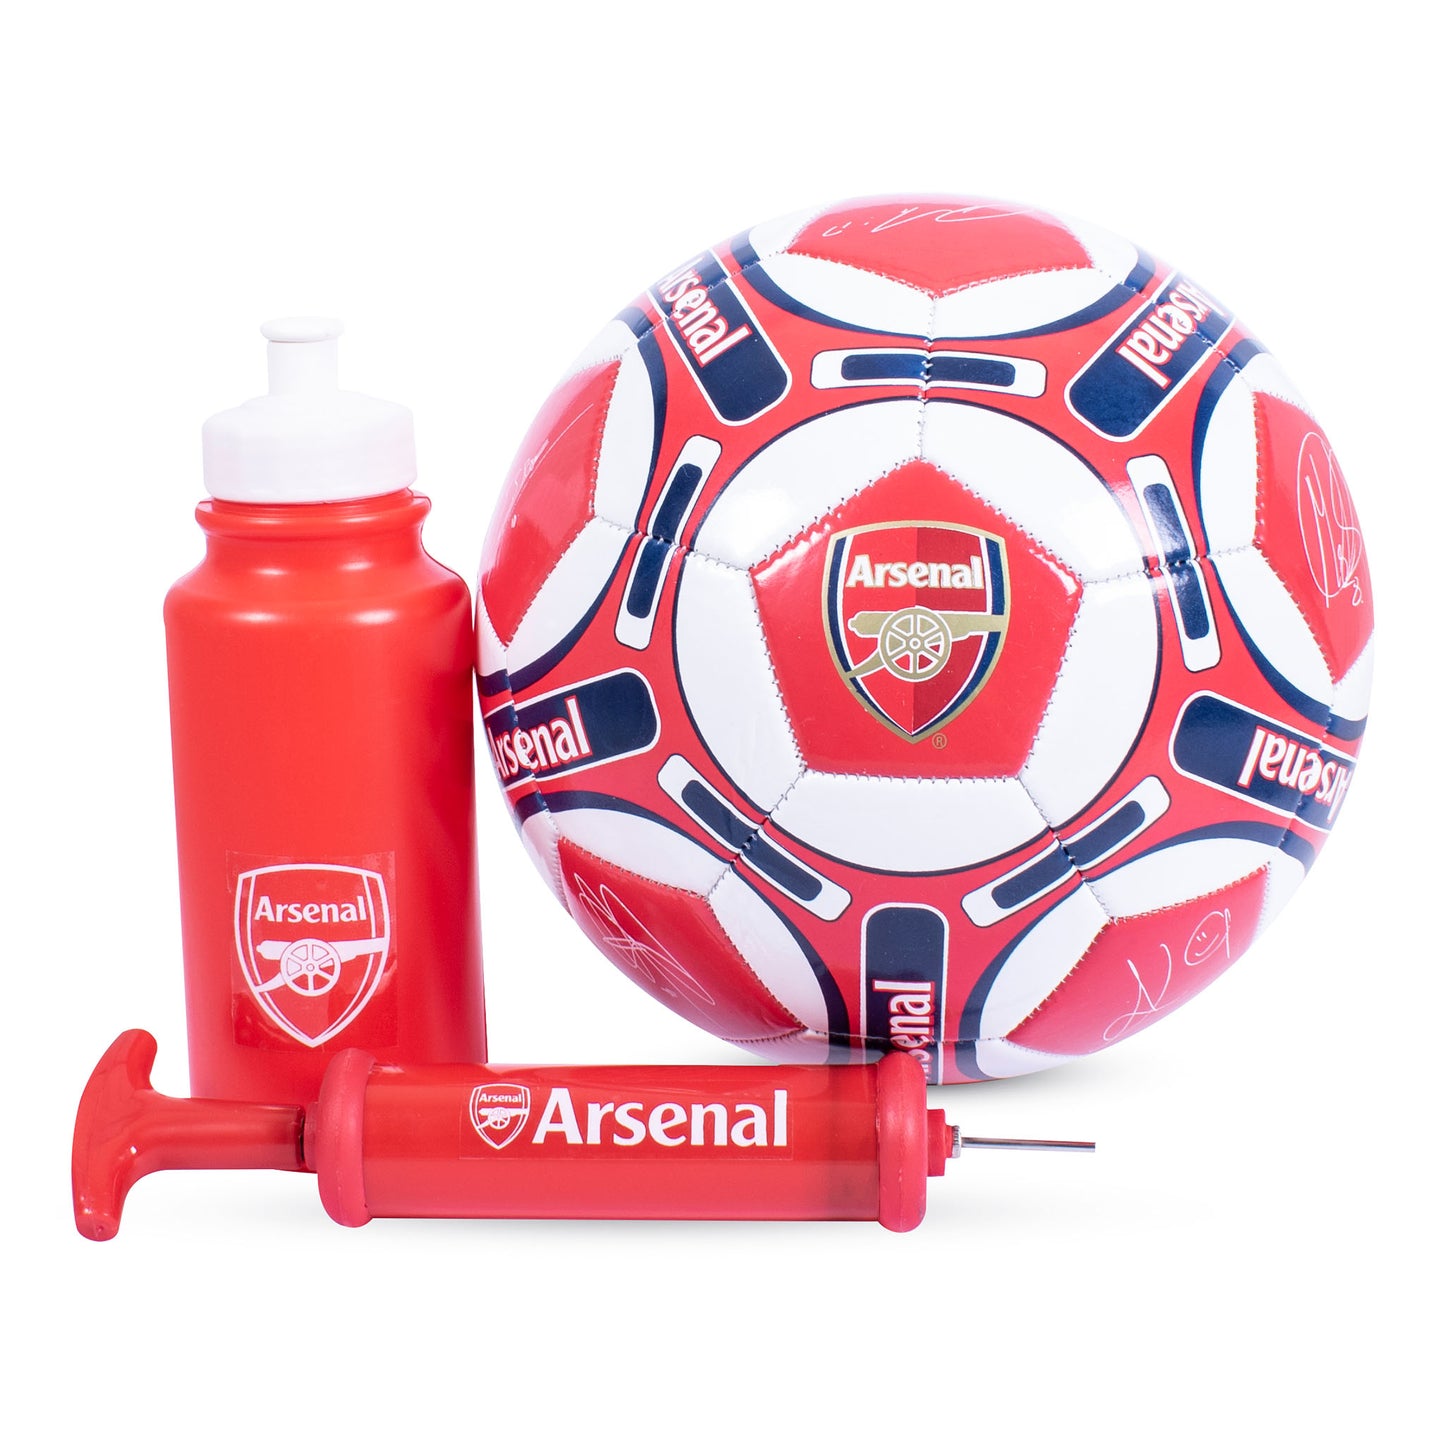 Arsenal Signature Football Gift Set